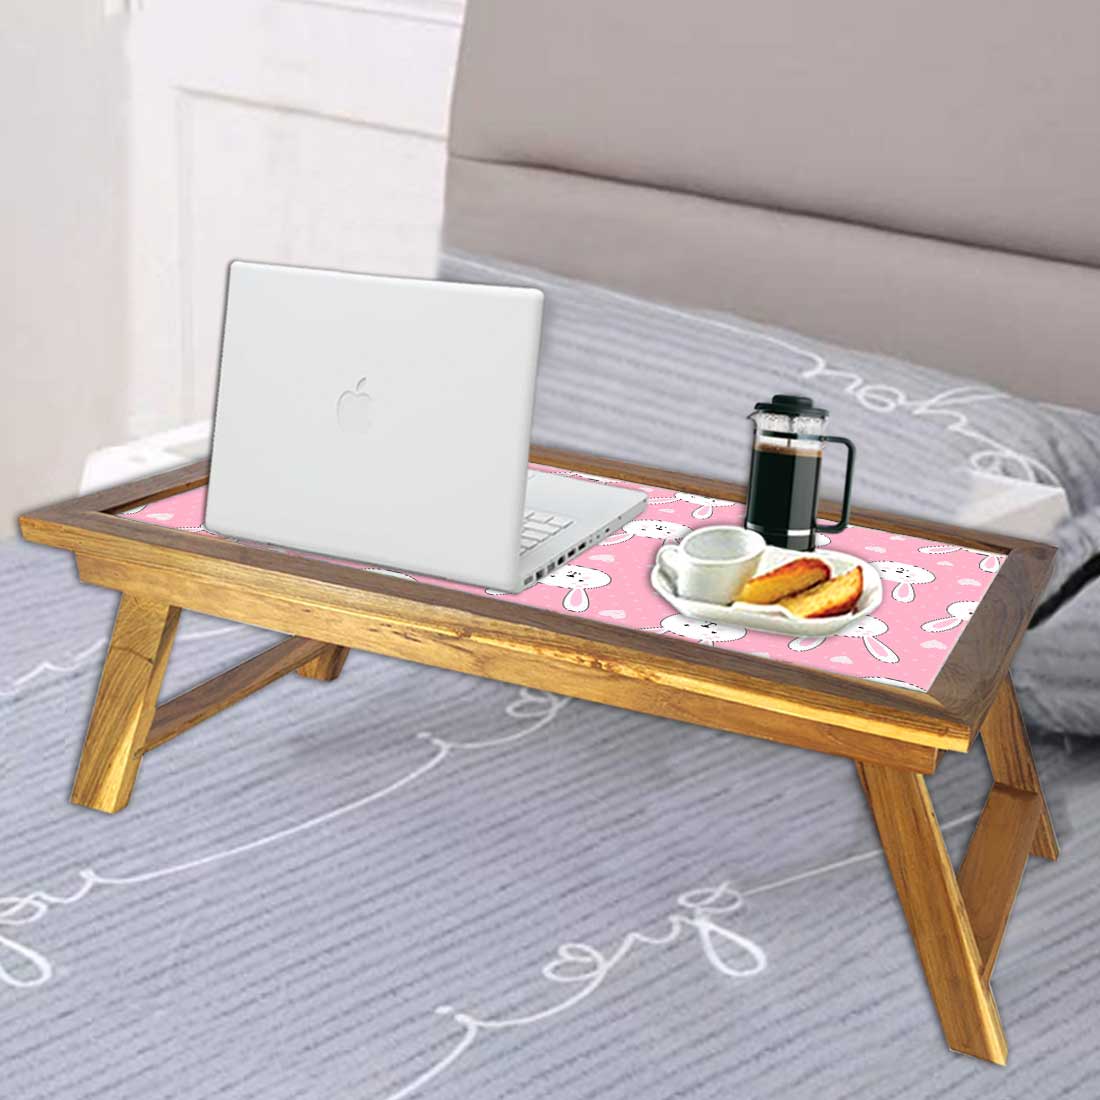 Wooden Folding Laptop Desk Study Table for Bed Breakfast Tables - Rabbit Nutcase